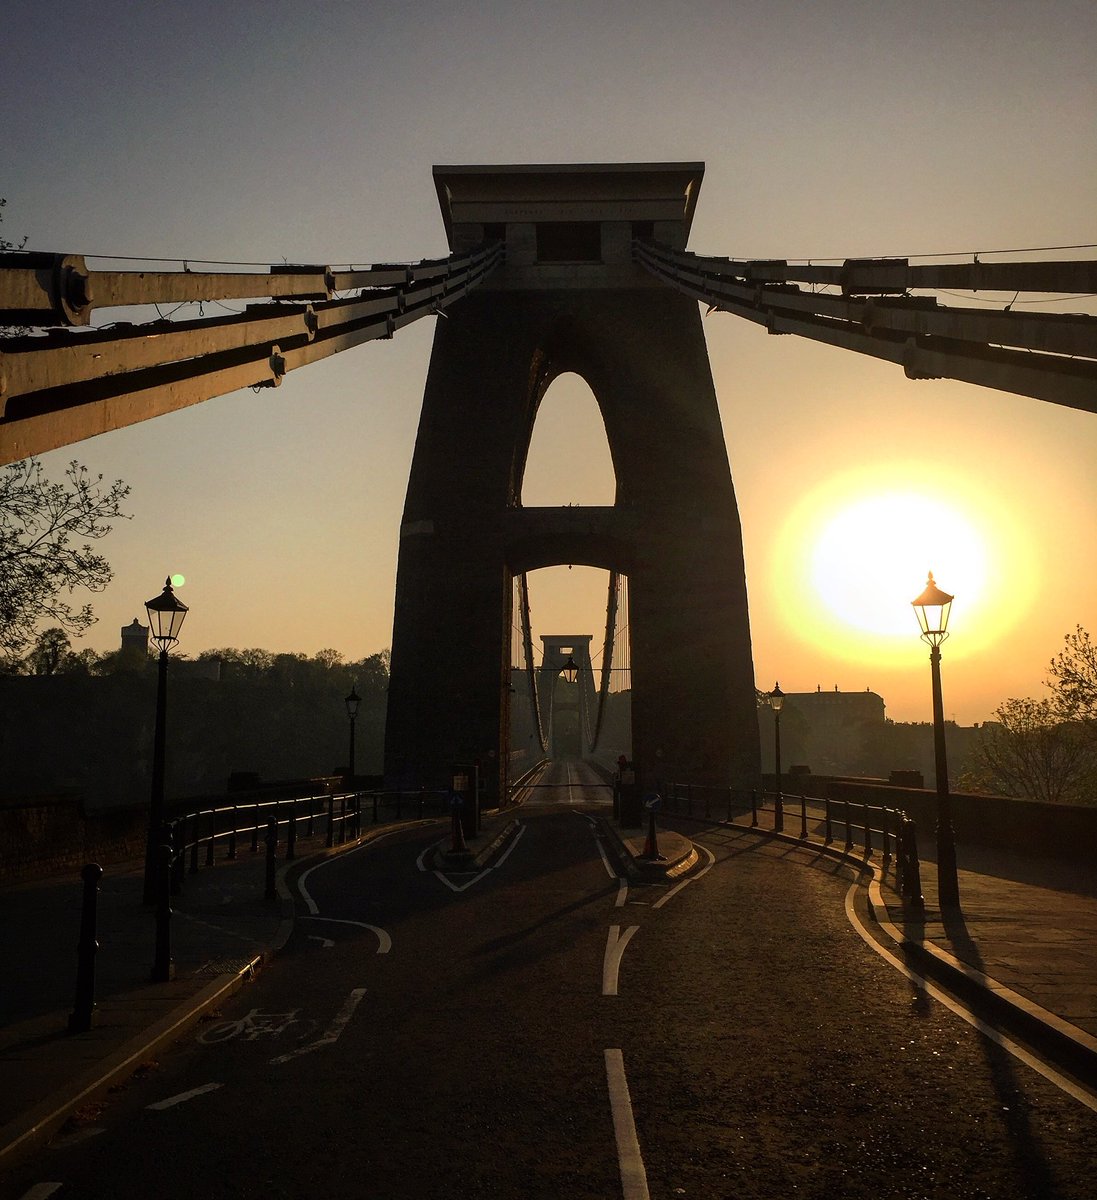 Another beautiful day ahead...looking lovely as always @brunelsbridge 🌅🌅🌅 #BristolIsBest #ILoveBristol